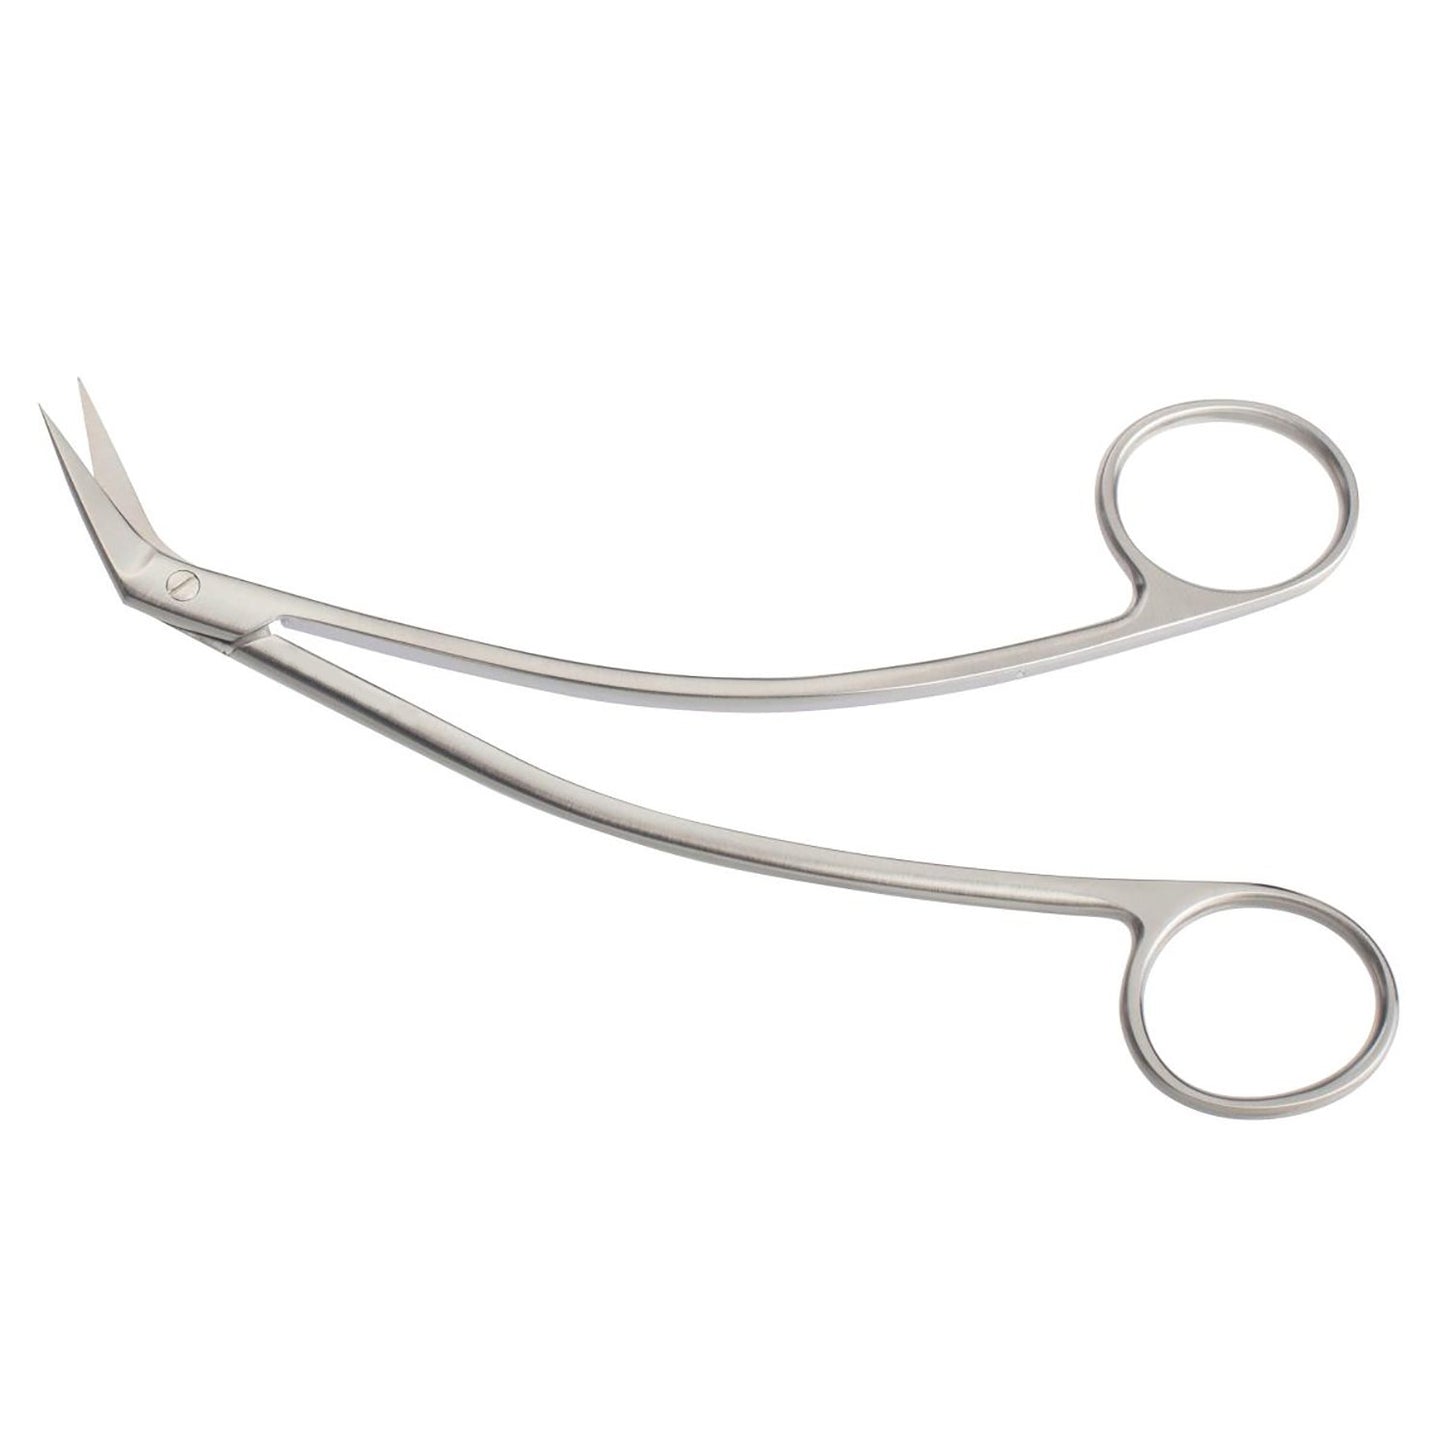 Favaloro Curved Shank Coronary Scissors